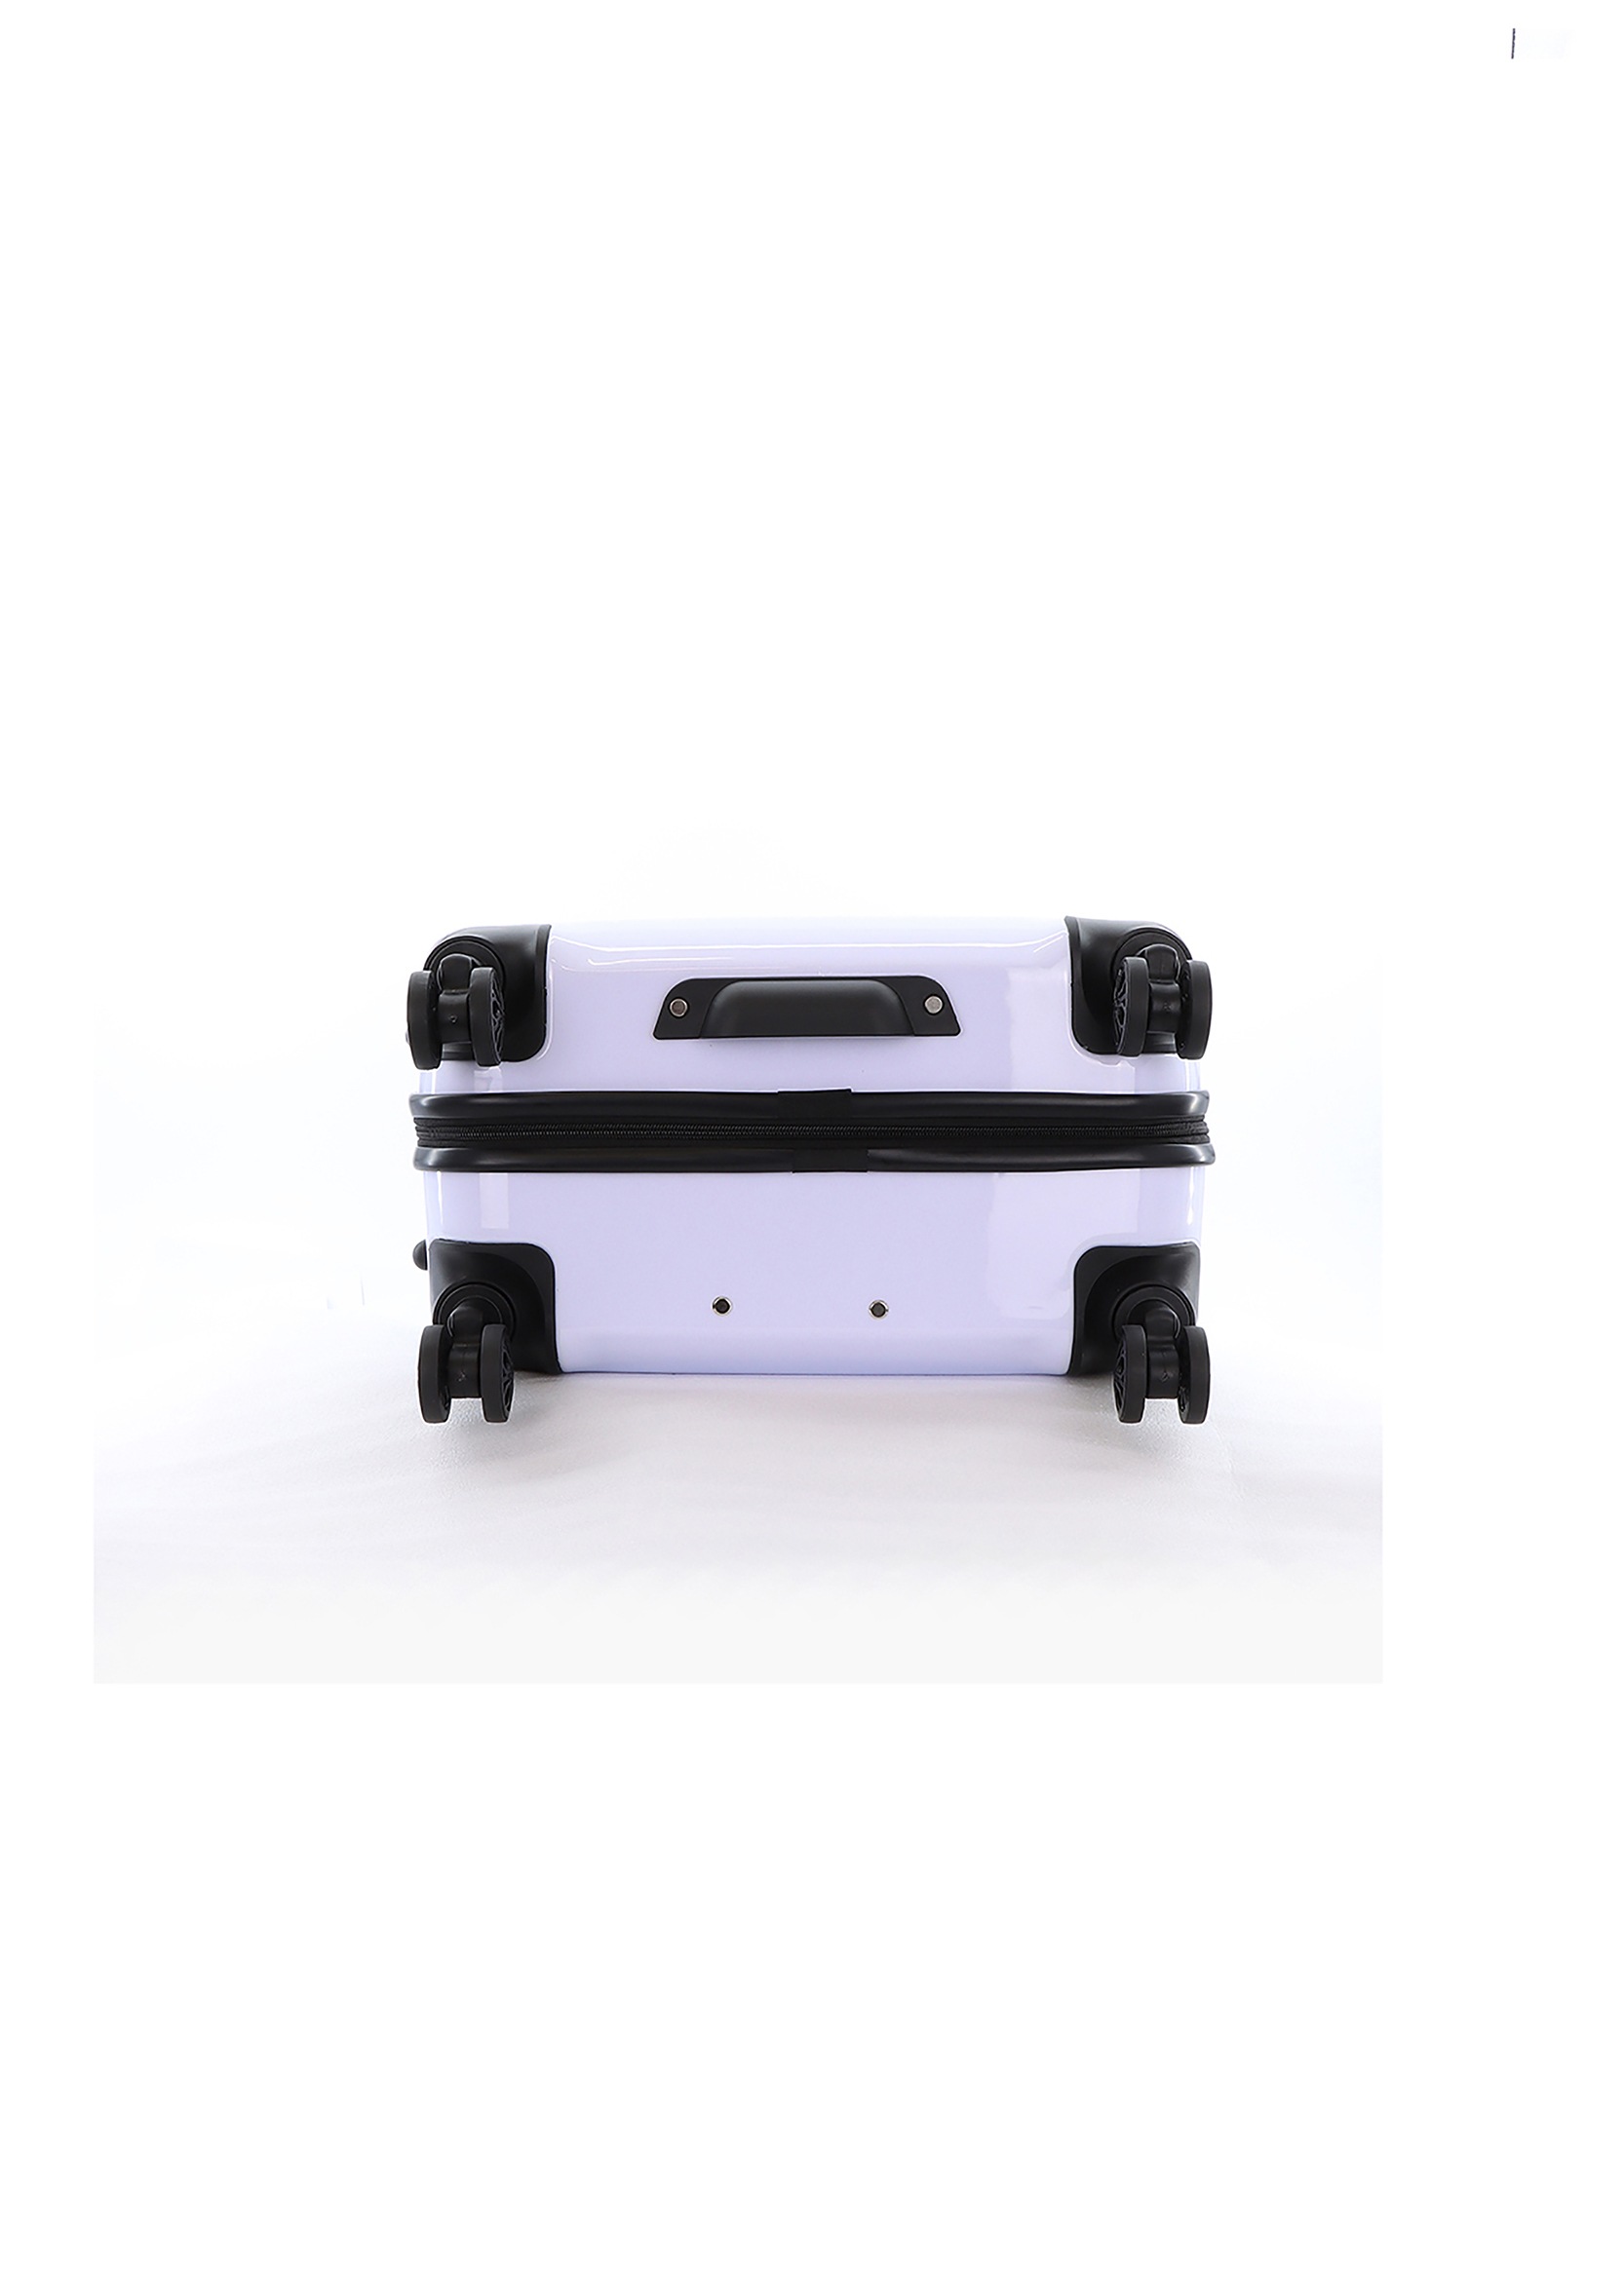 Saxoline® Koffer »Schmetterling«, mit arretierbarem Aluminium-Trolleysystem